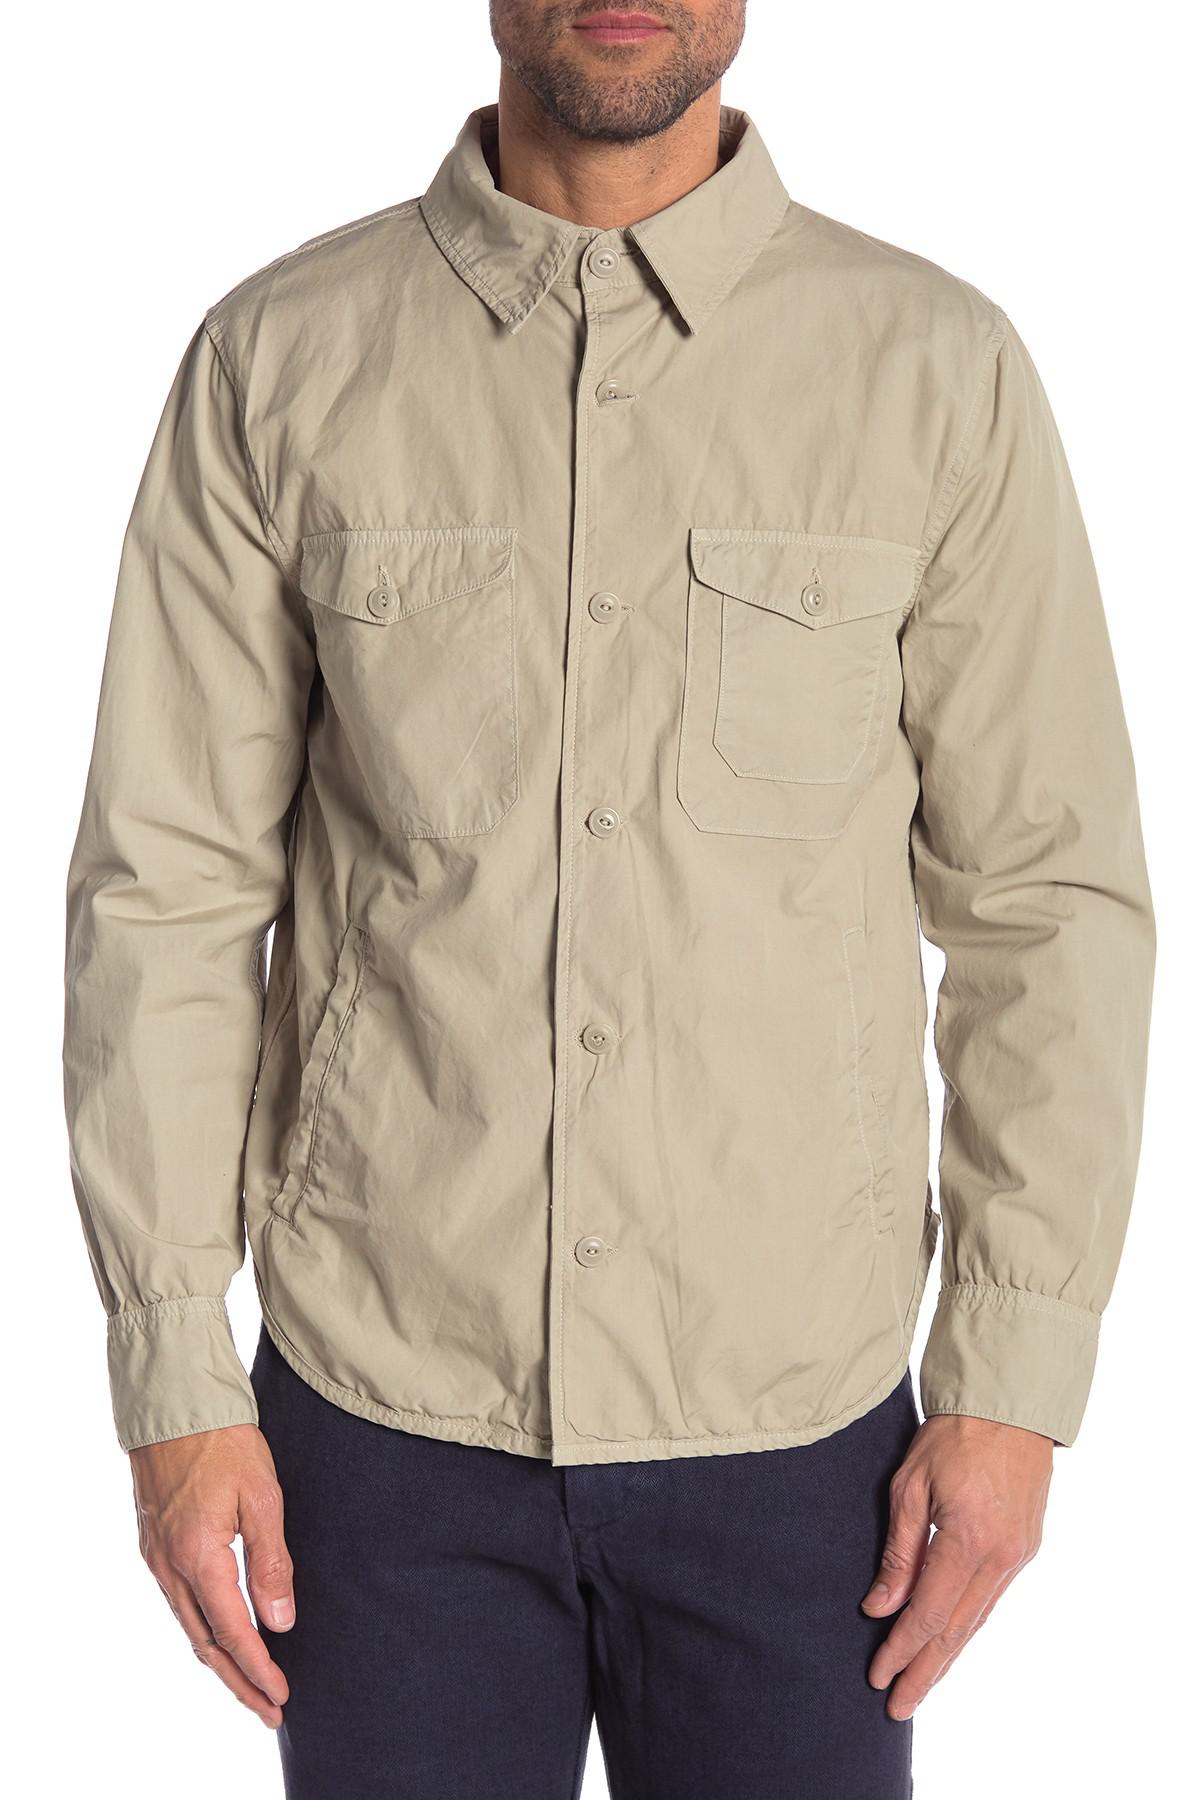 Save Khaki Cotton Solid Long Sleeve Regular Fit Shirt Jacket in lt